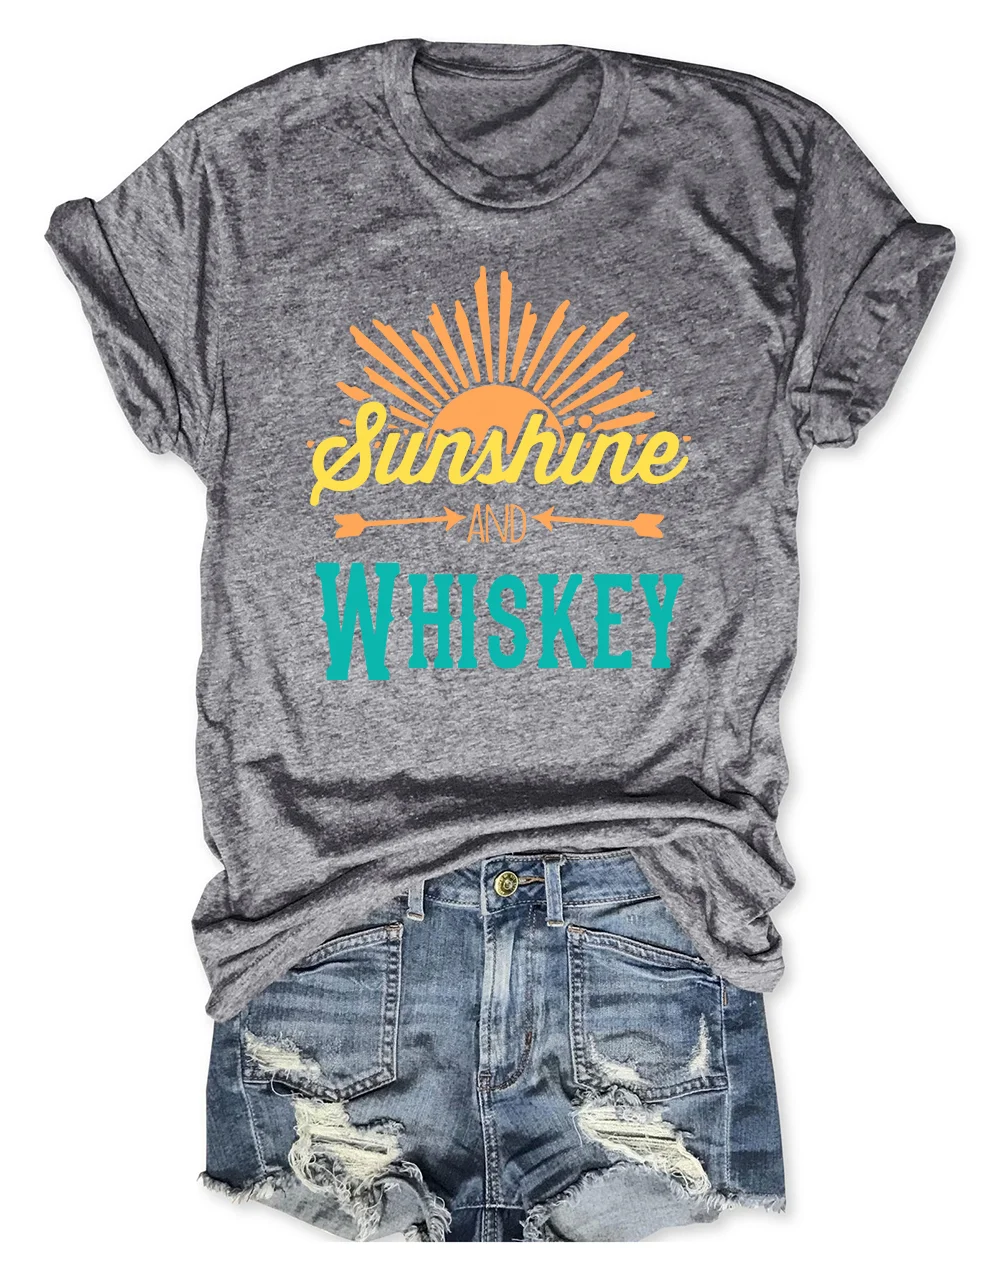 Sunshine And Whiskey Drinking T-Shirt